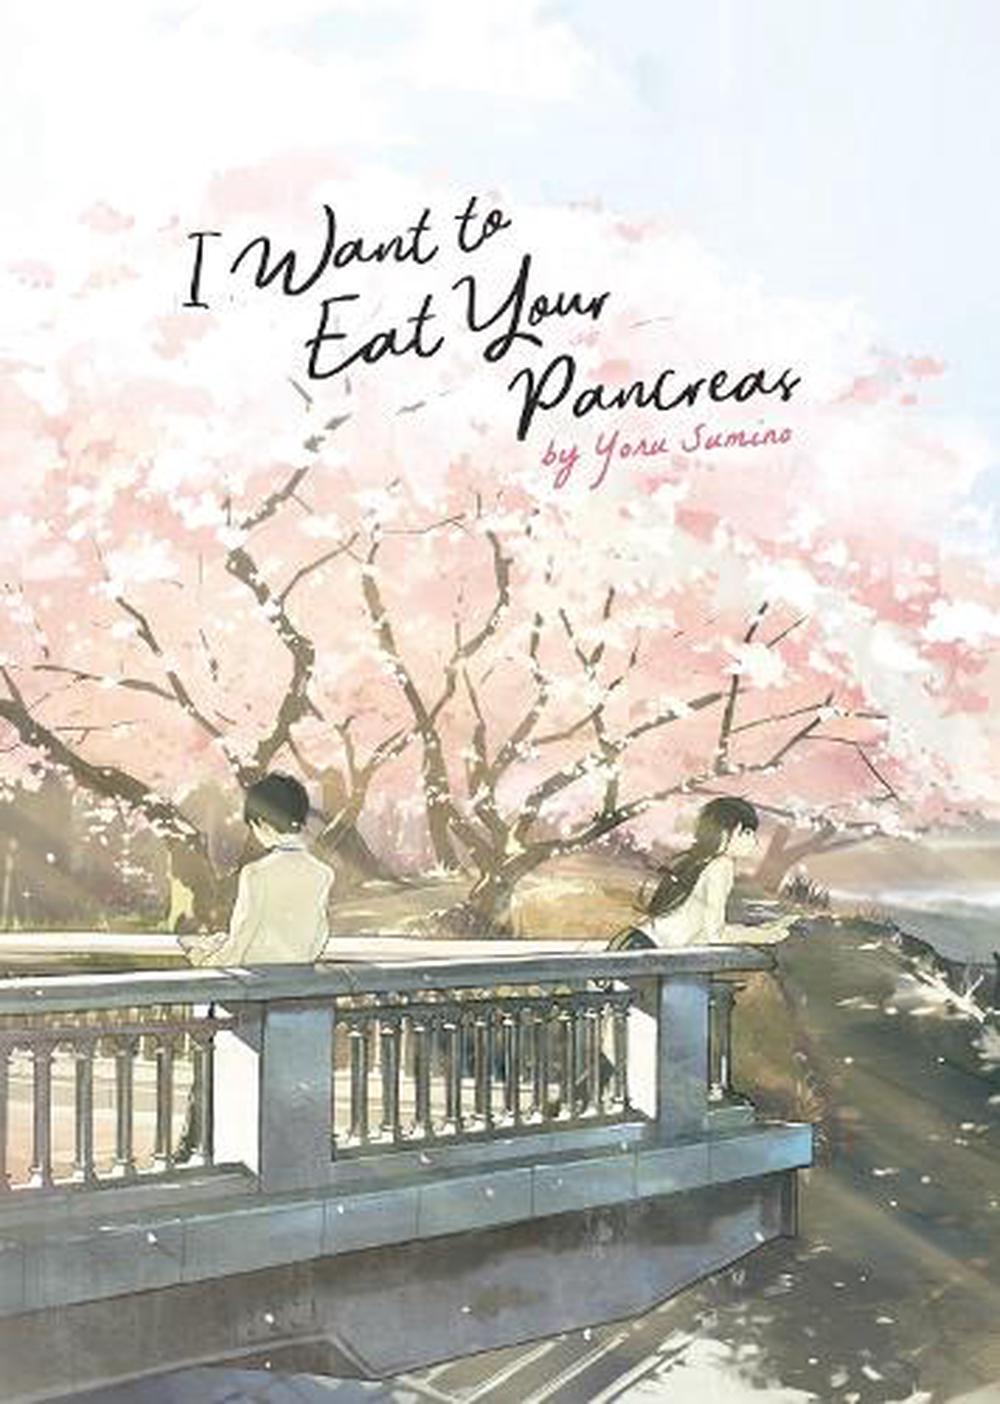 I Want to Eat Your Pancreas (light Novel) by Yoru Sumino (English